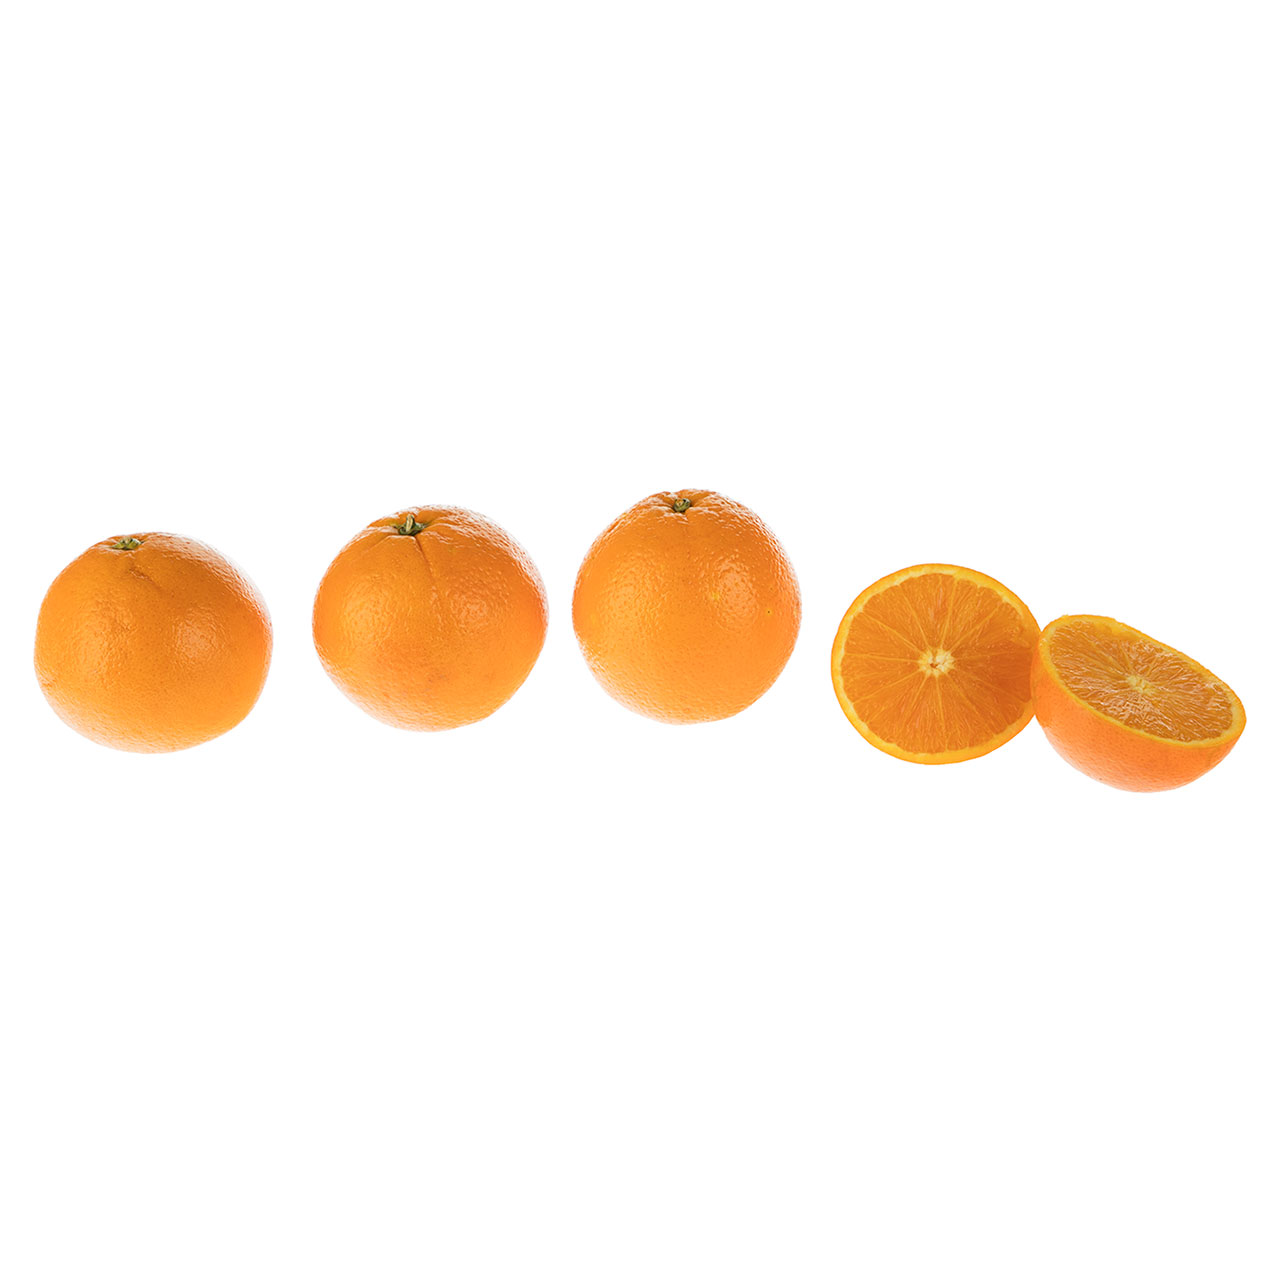 پرتقال تامسون شمال - 1 کیلوگرم